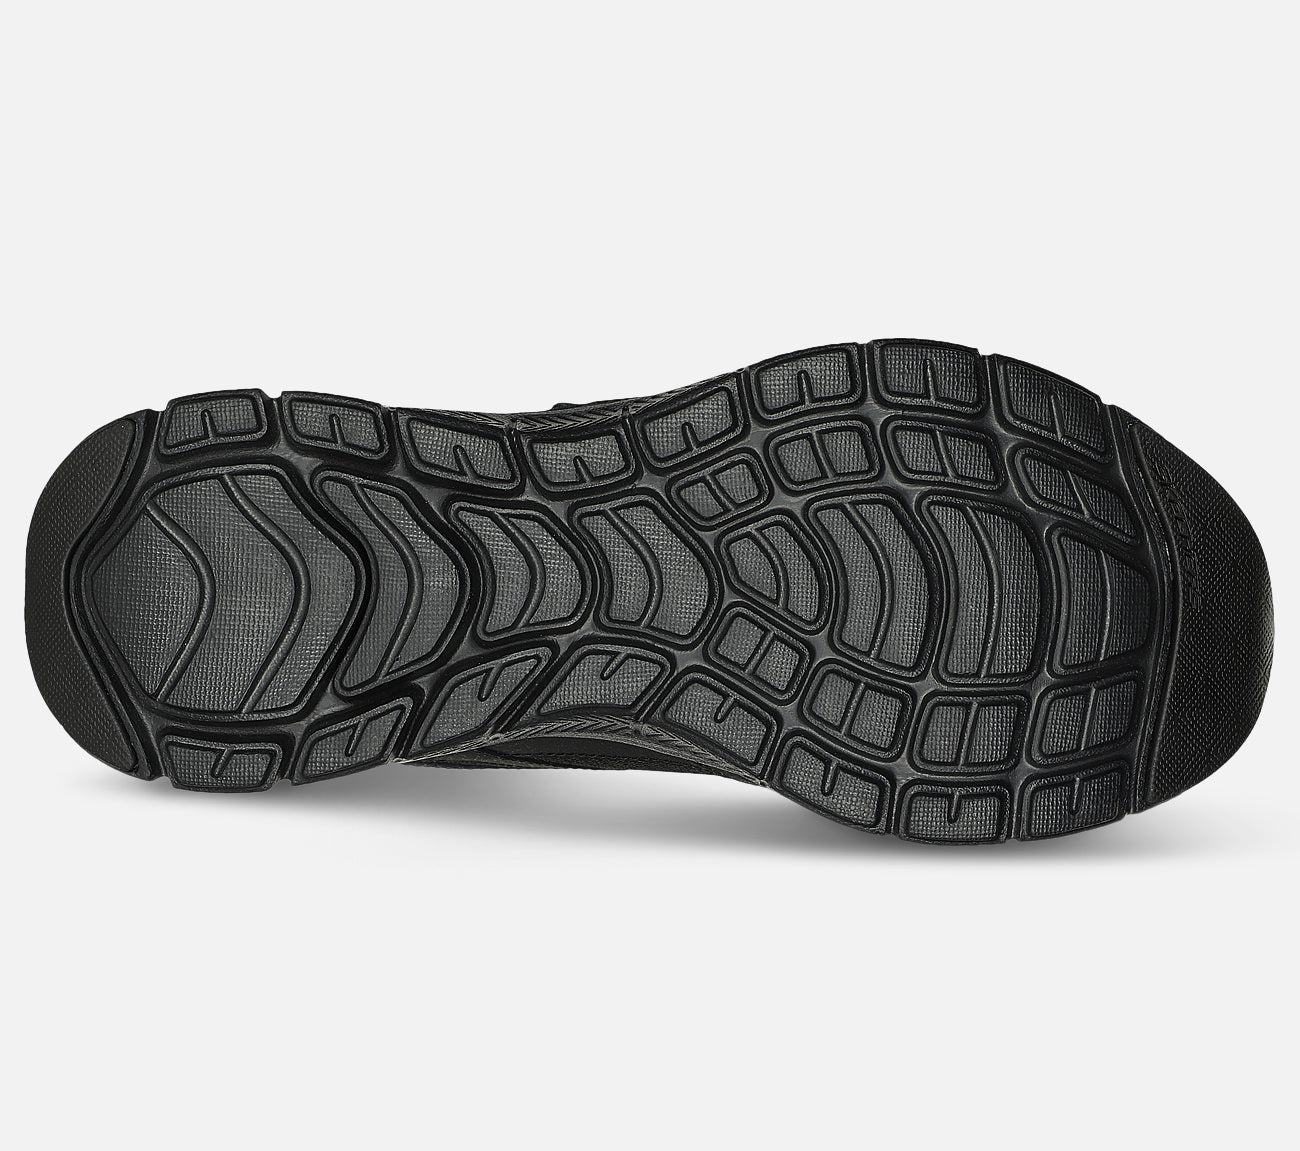 Flex Advantage 4.0 - Fortner Shoe Skechers